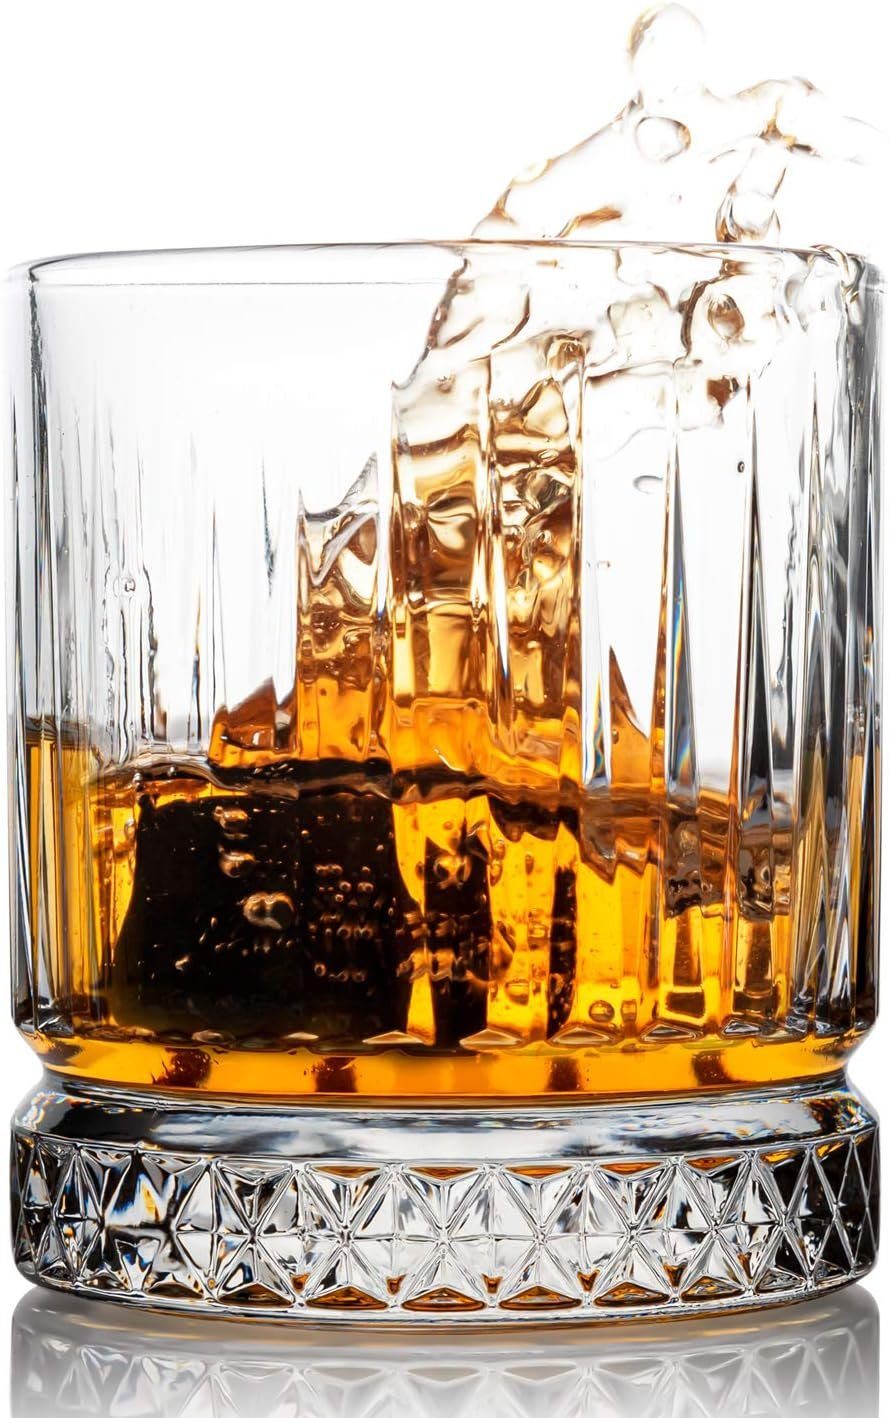 Hediyesepeti Cocktail-Set Whisky Stones Set (12-tlg) Marmor inklusive, mit und 12 2 Gläsern Eiswürfeln